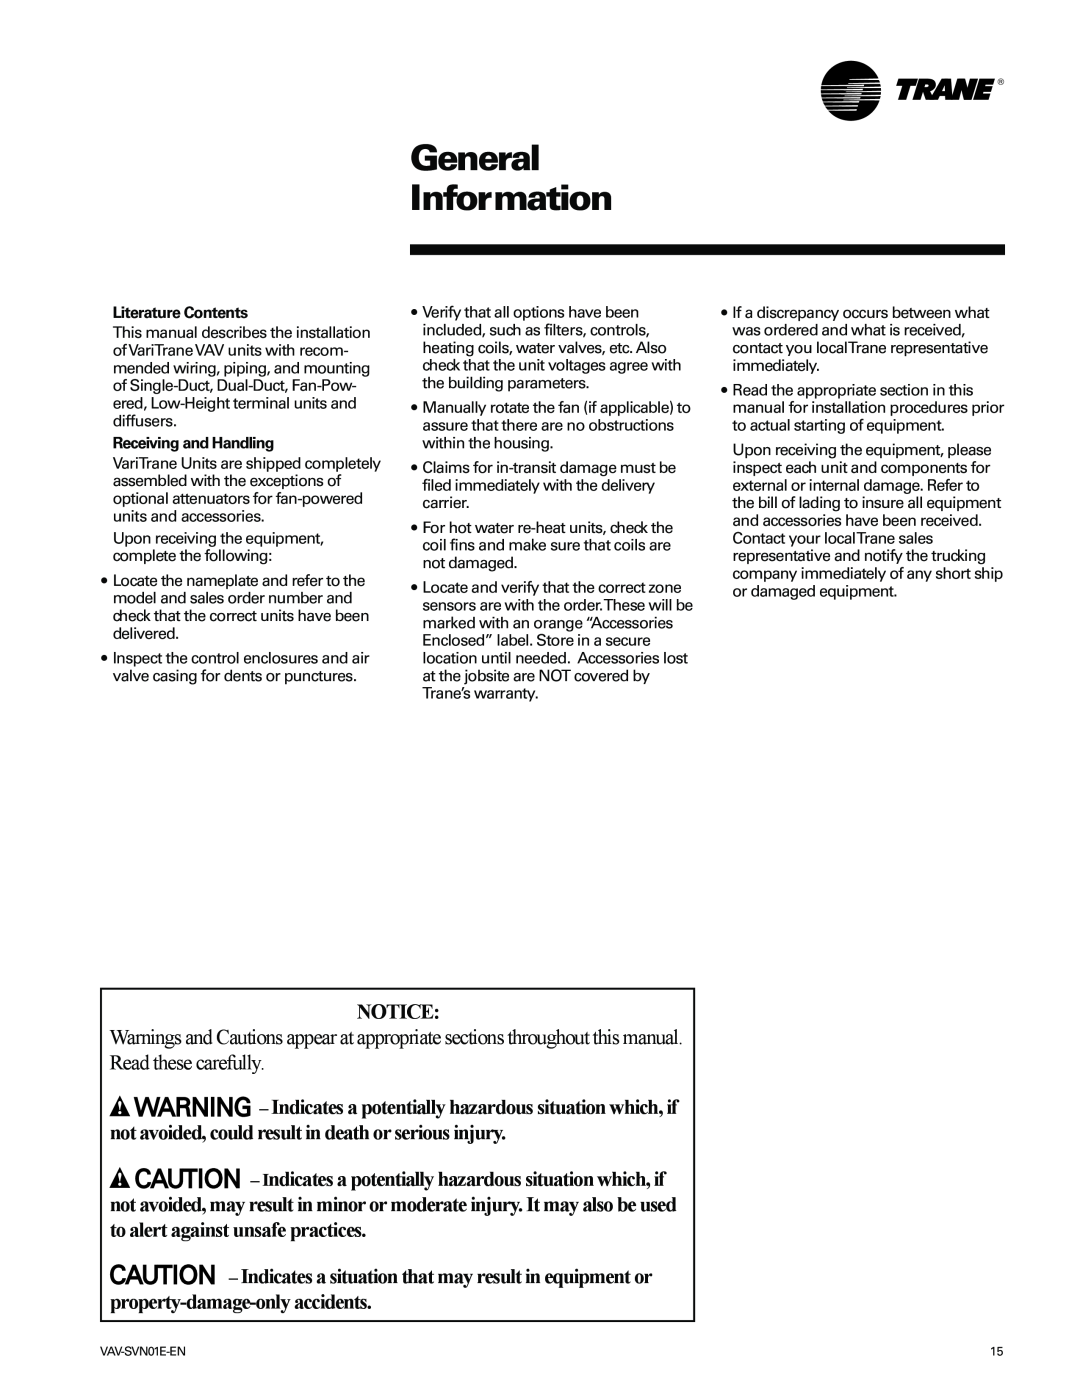 Trane Trane, VAV-SVN01E-EN manual General Information 